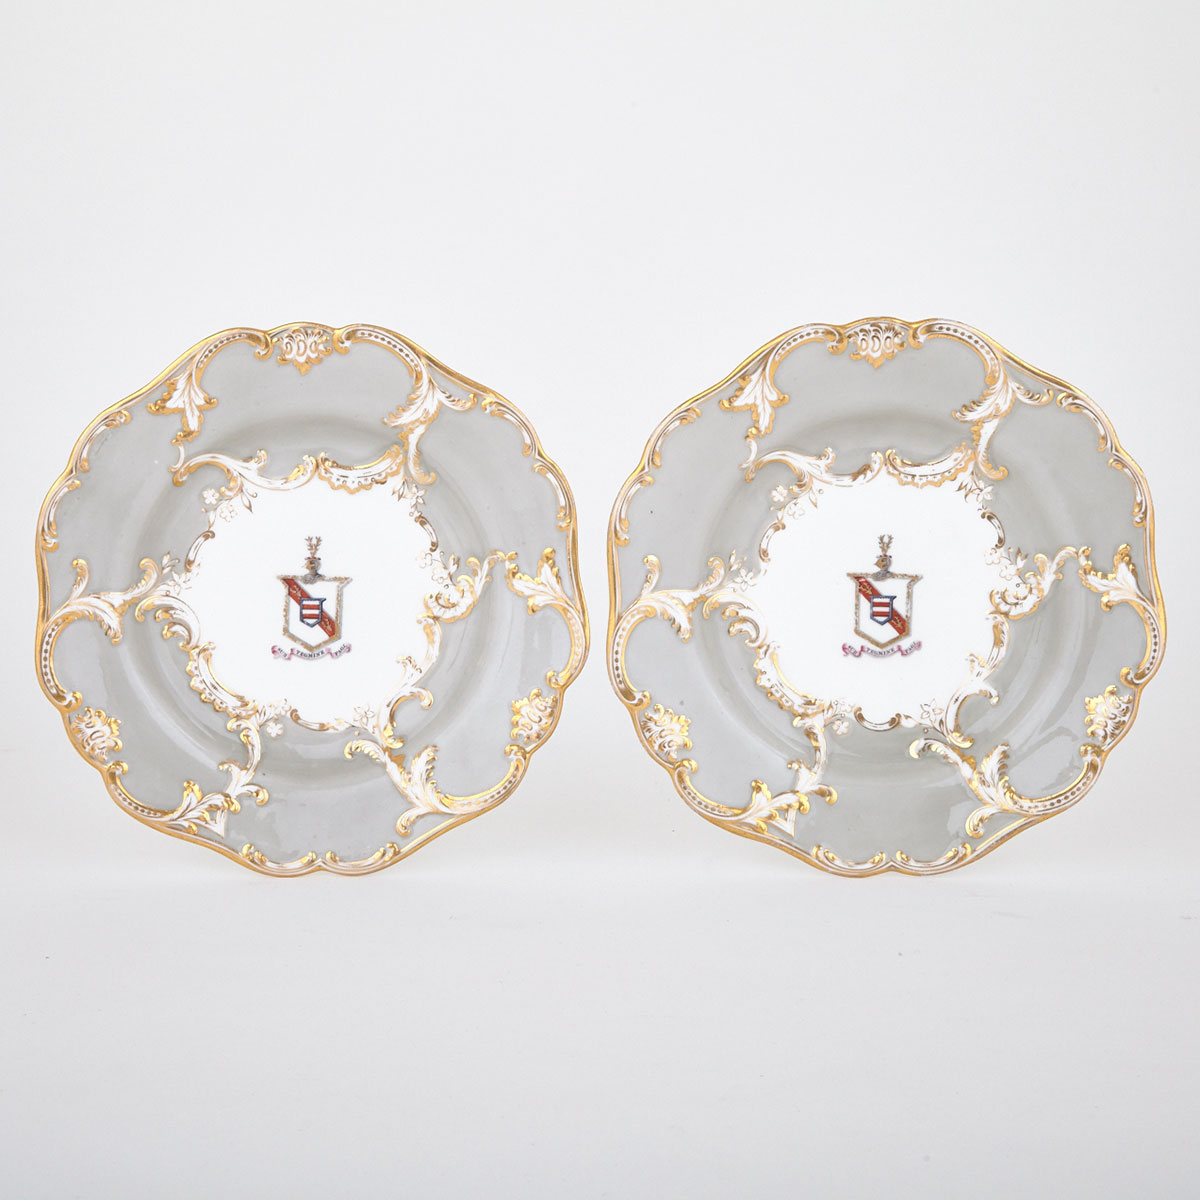 Pair of Minton Armorial Plates, c.1830